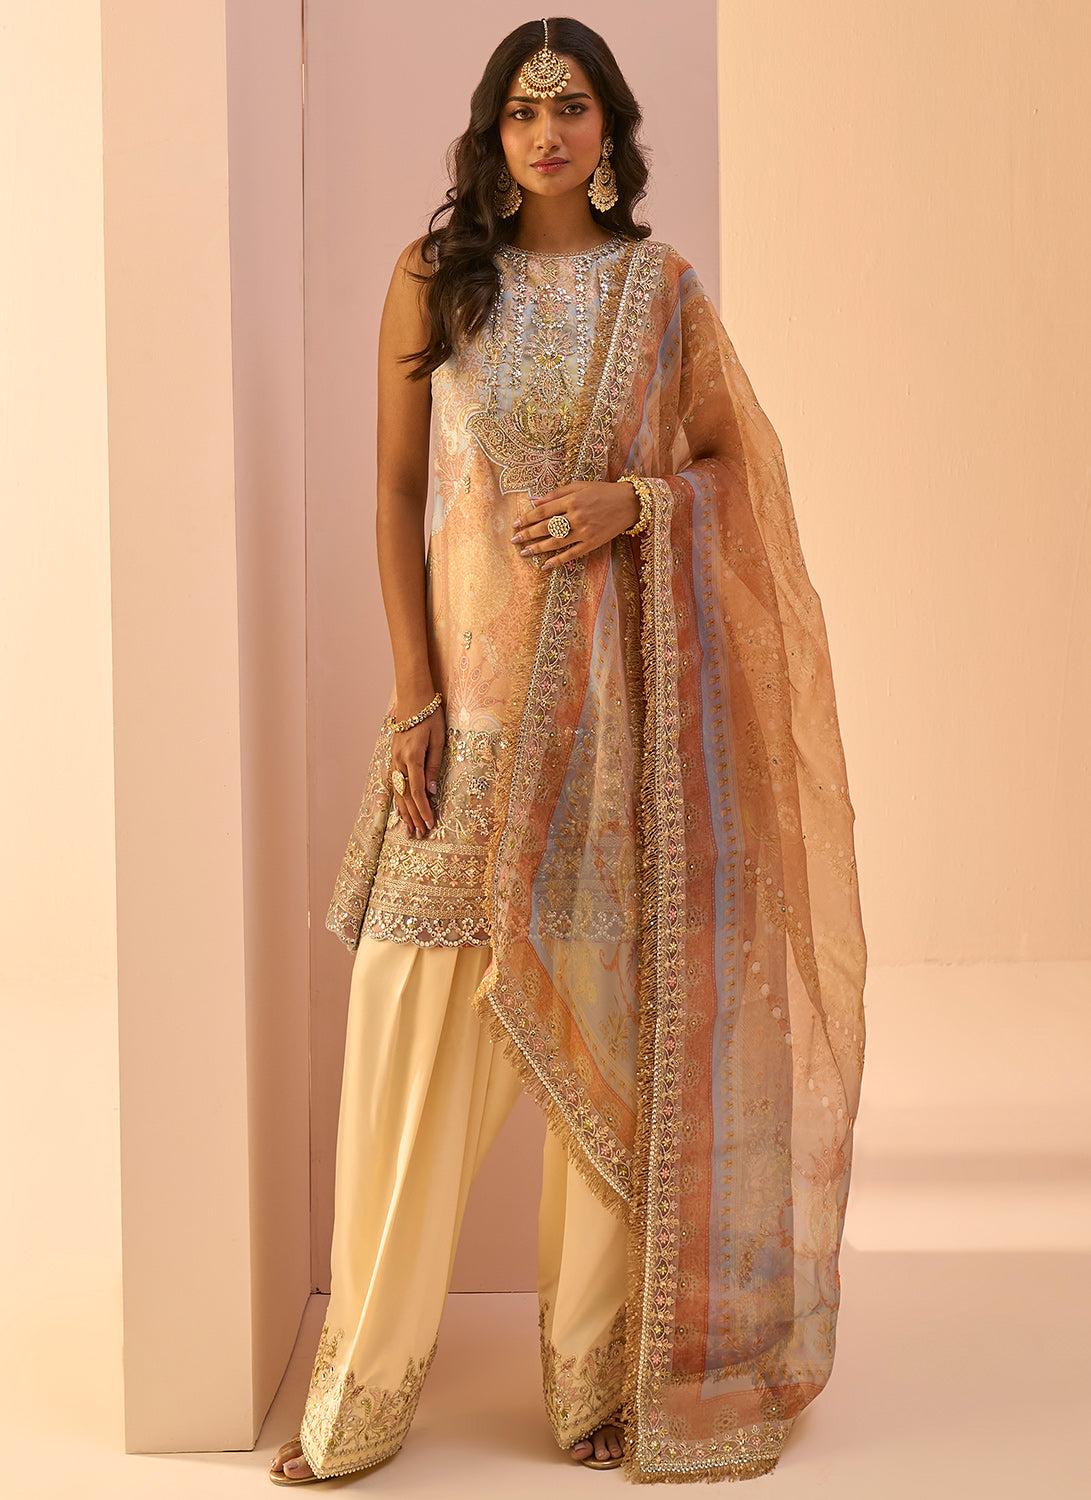 Plain Punjabi Suits With Banarasi Dupatta Designs ll Latest Simple Stylish  Look Ideas - YouTube